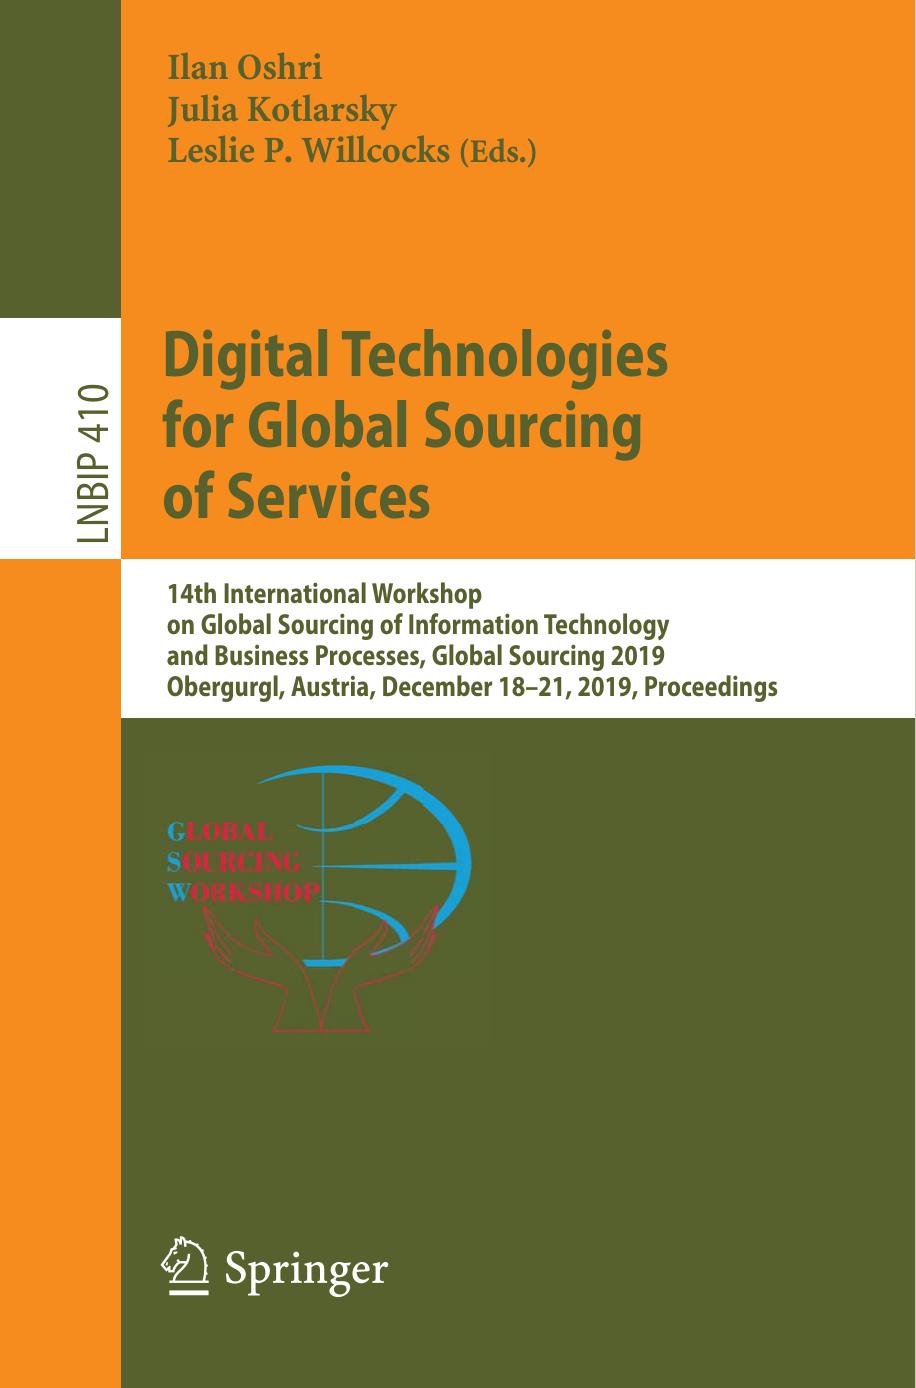 Digital Technologies for Global Sourcing of Services : 14th International Workshop on Global Sourcing of Information Technology and Business Processes, Global Sourcing 2019, Obergurgl, Austria, December 18-21, 2019, Proceedings